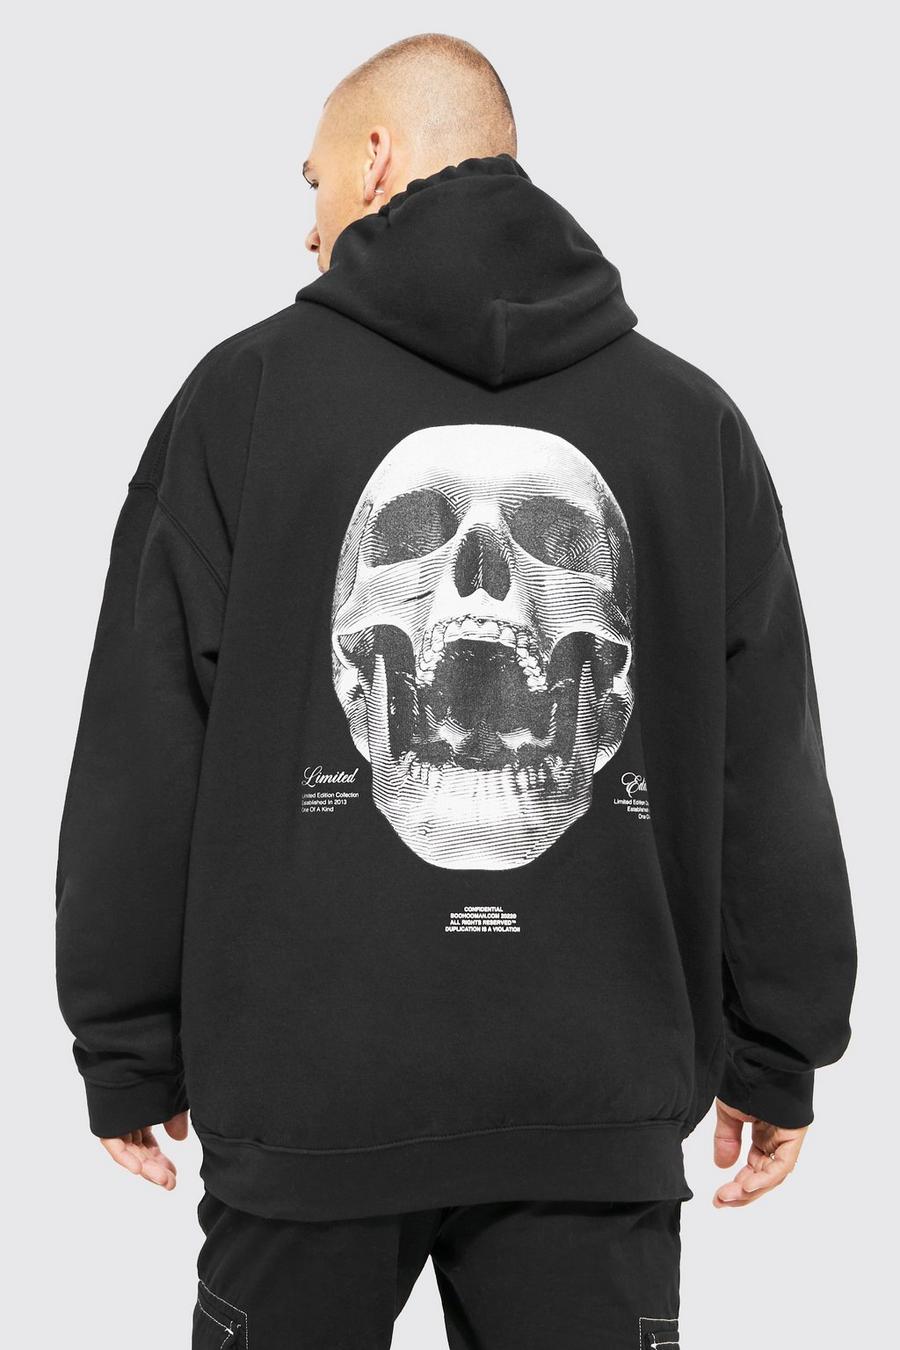 https://media.boohoo.com/i/boohoo/bmm27031_black_xl/male-black-oversized-skull-graphic-hoodie/?w=900&qlt=default&fmt.jp2.qlt=70&fmt=auto&sm=fit